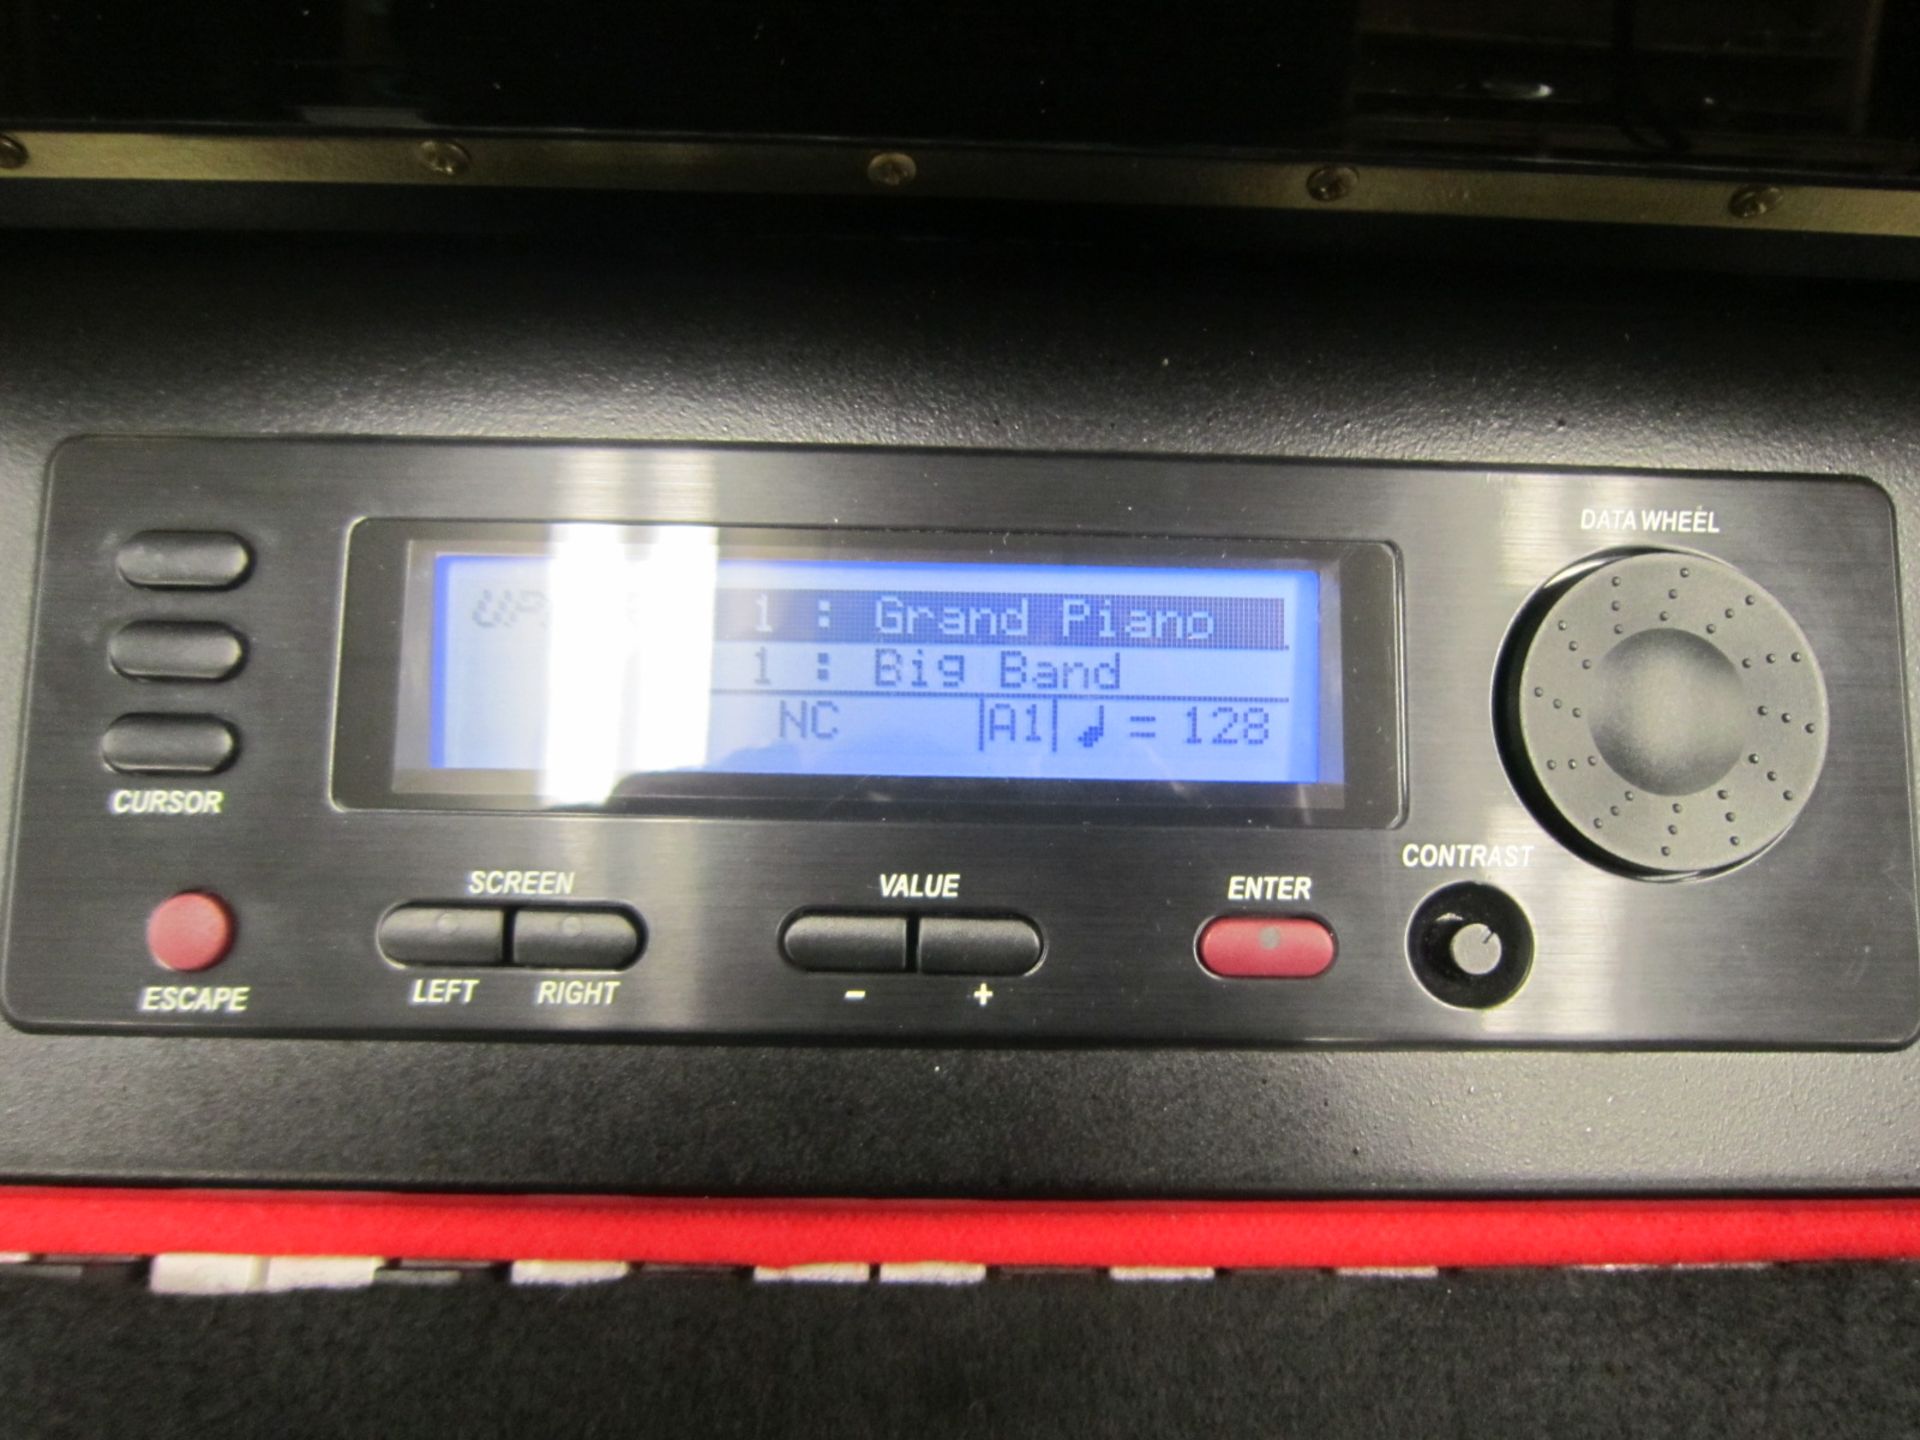 Suzuki GP-3 Mini Grand / Grande Piano - 128 different instrument sounds with SD Memory card slot and - Image 4 of 5